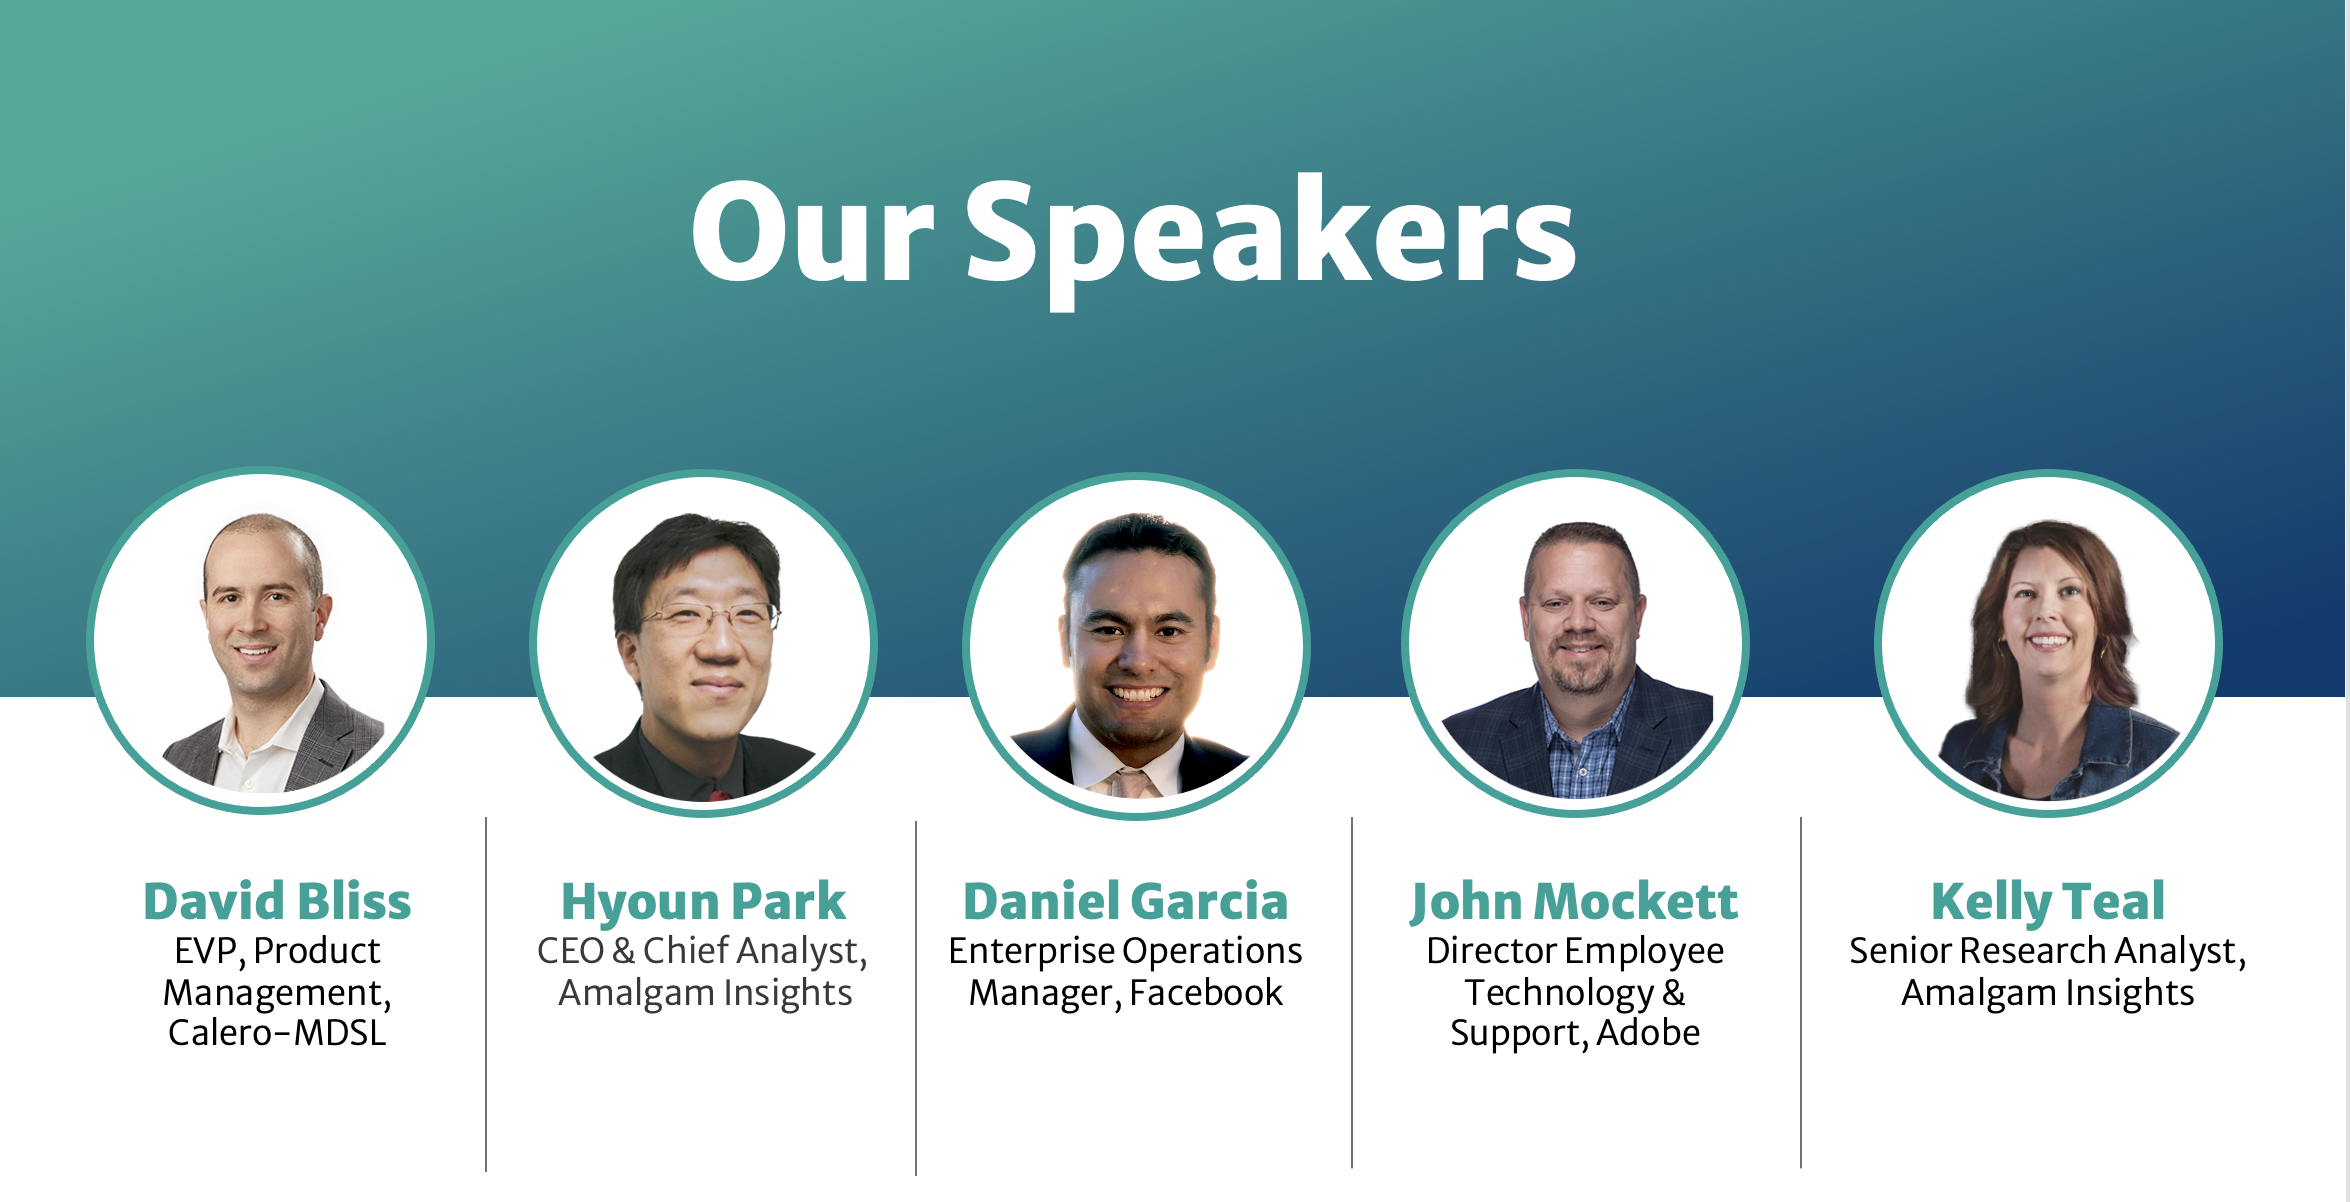 Headshot photos of webinar speakers: Hyoun Park, Daniel Garcia, John Mockett, David Bliss